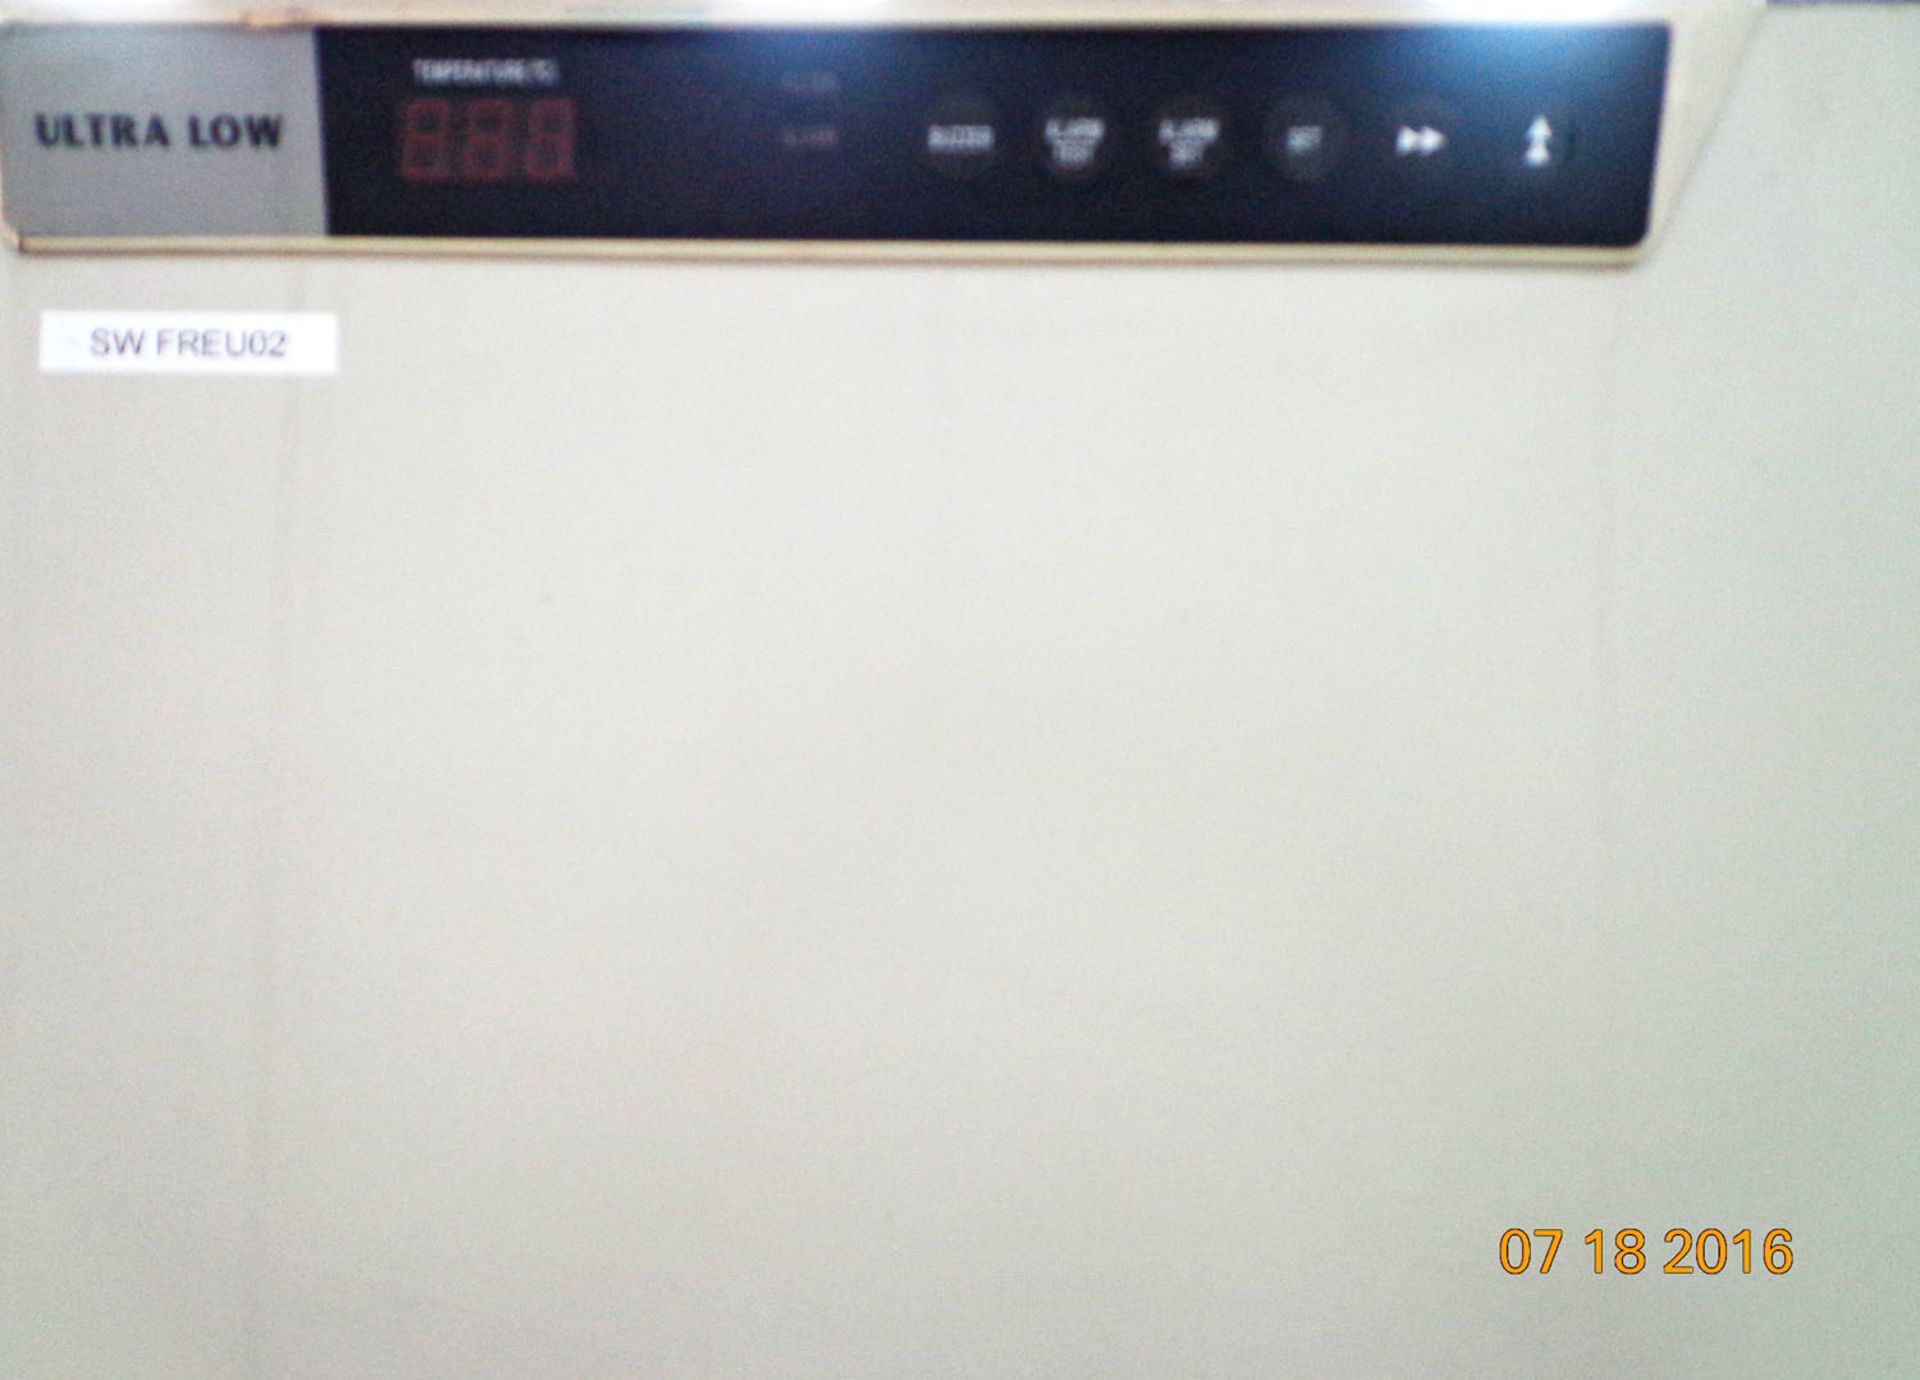 Sanyo -80 freezer needs re-gassed hence price - Image 4 of 4